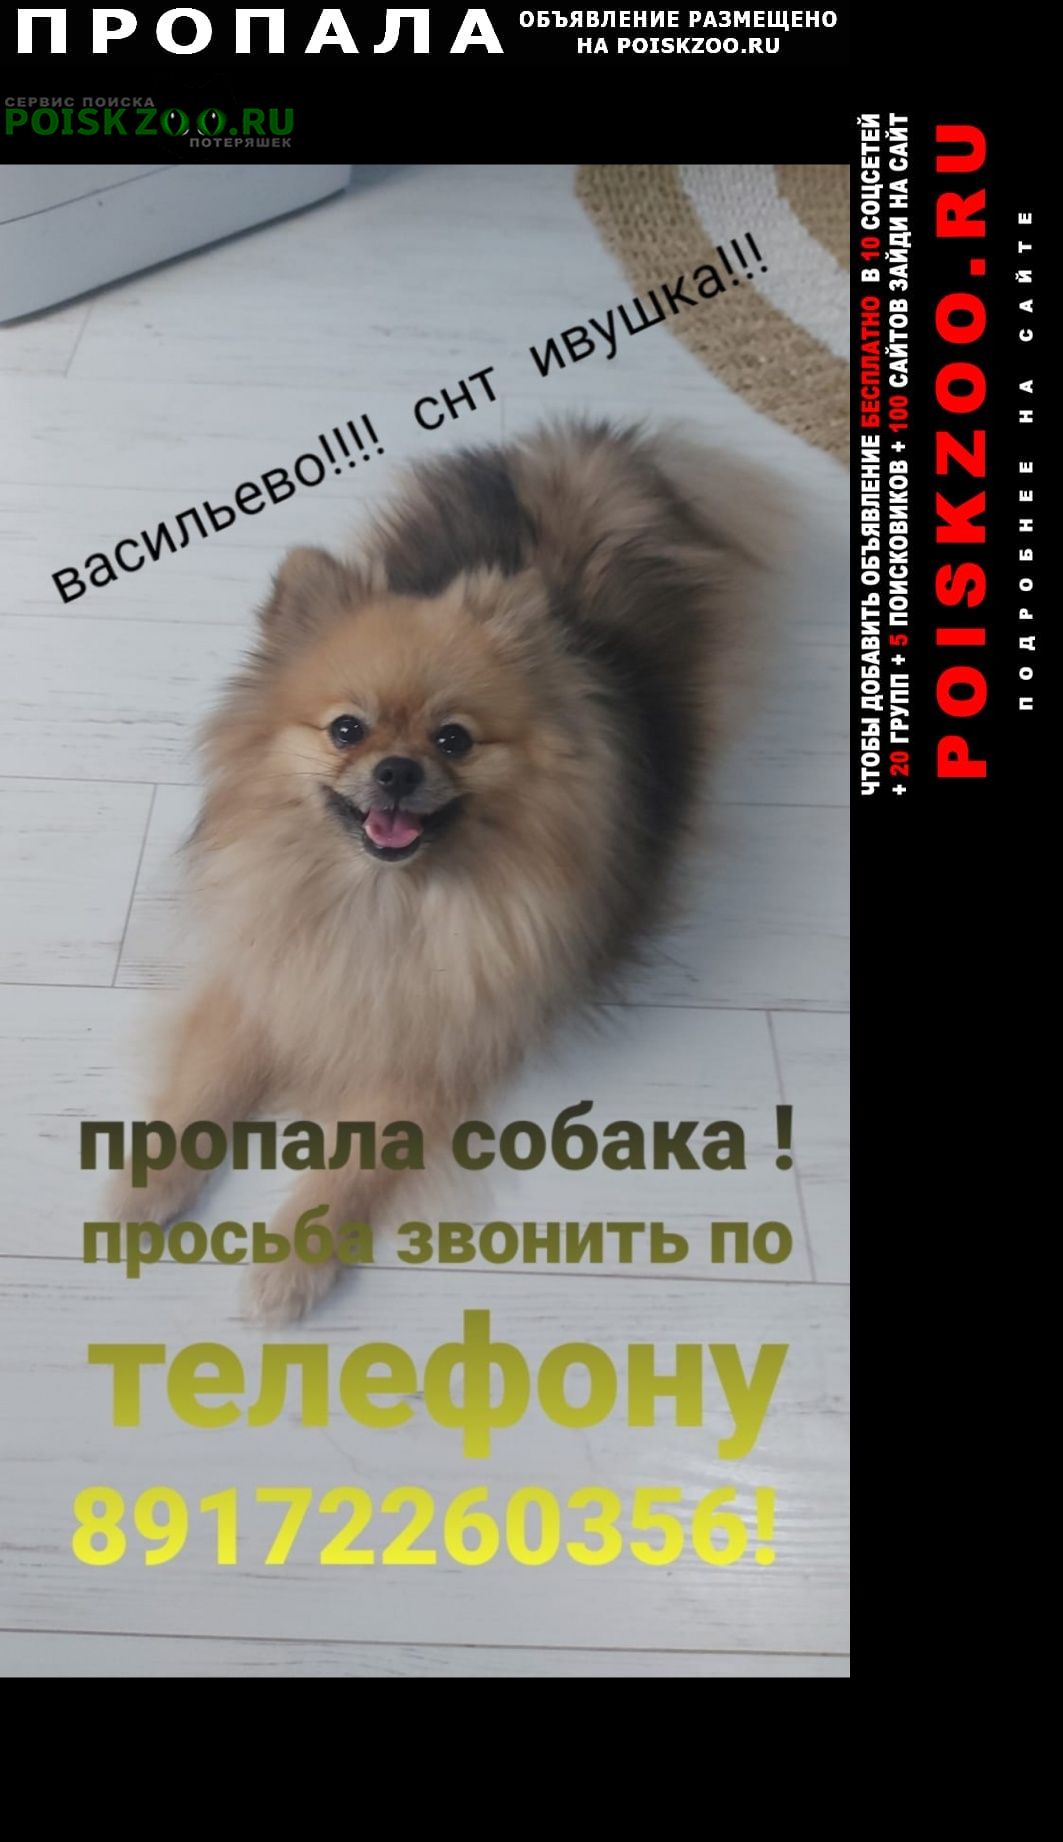 Пропала собака шпиц девочка. в васильево Казань